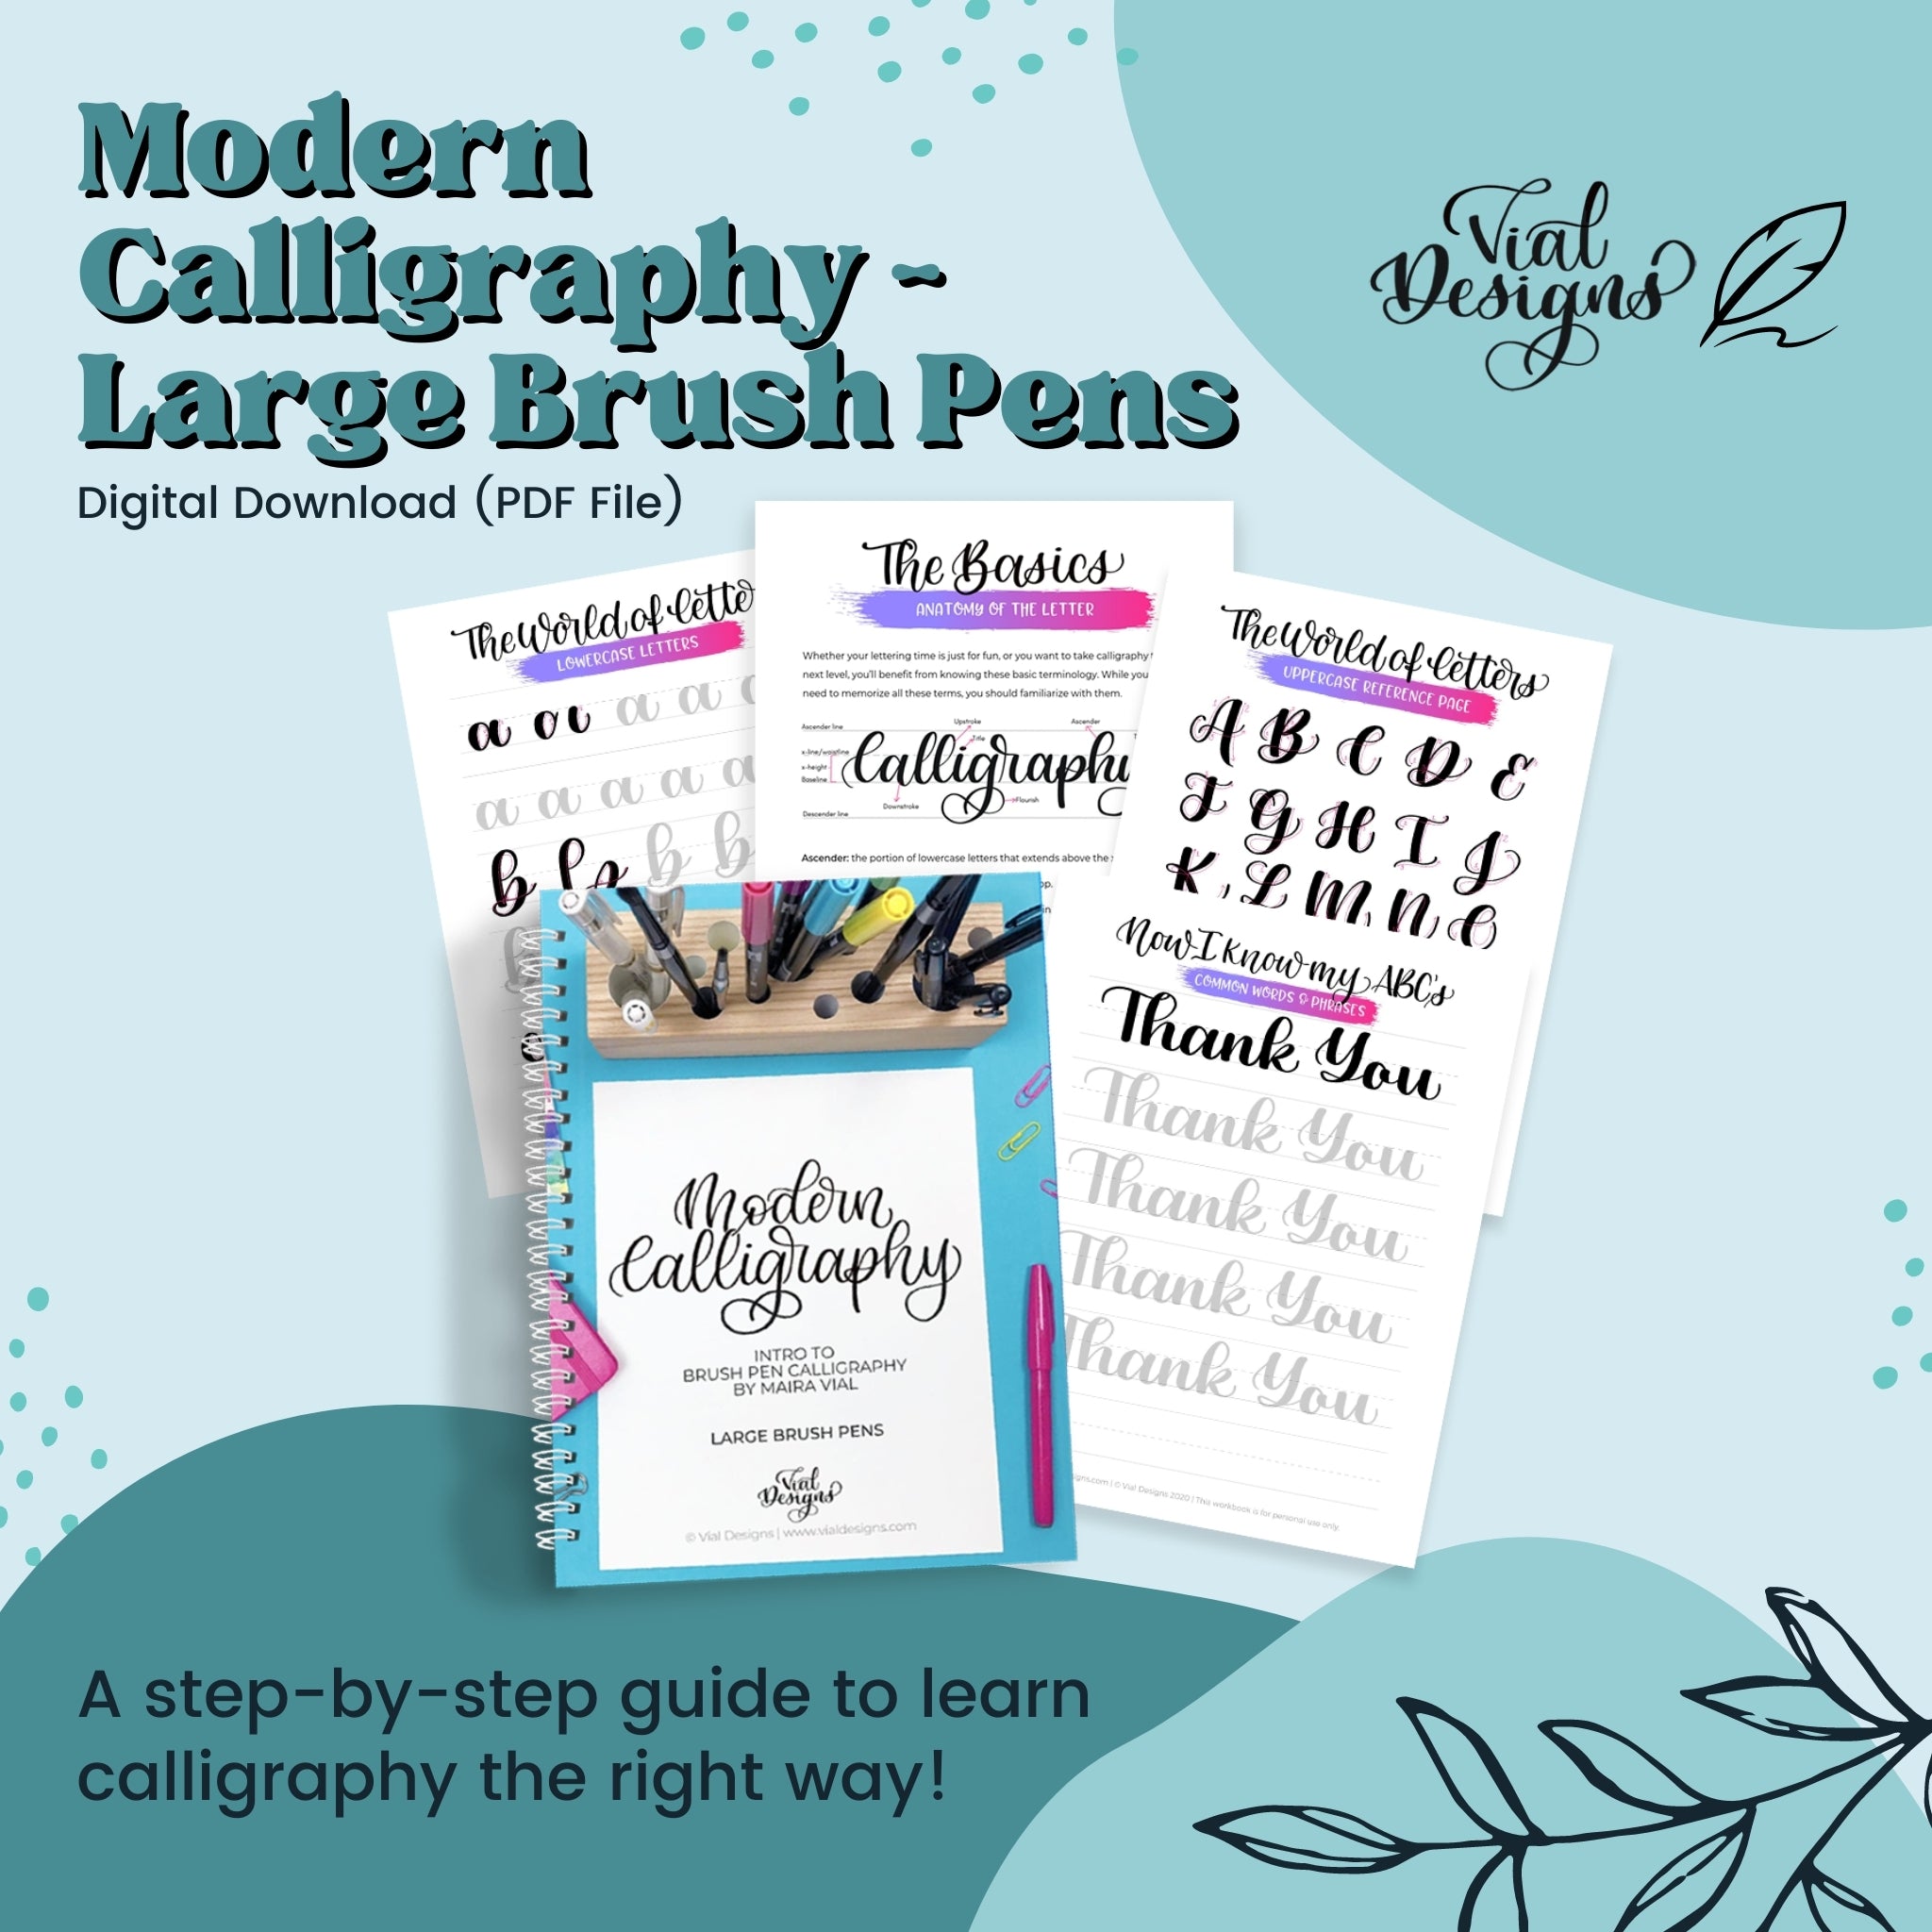 Brush Pen Lettering Tutorial: How to Use a Brush Pen